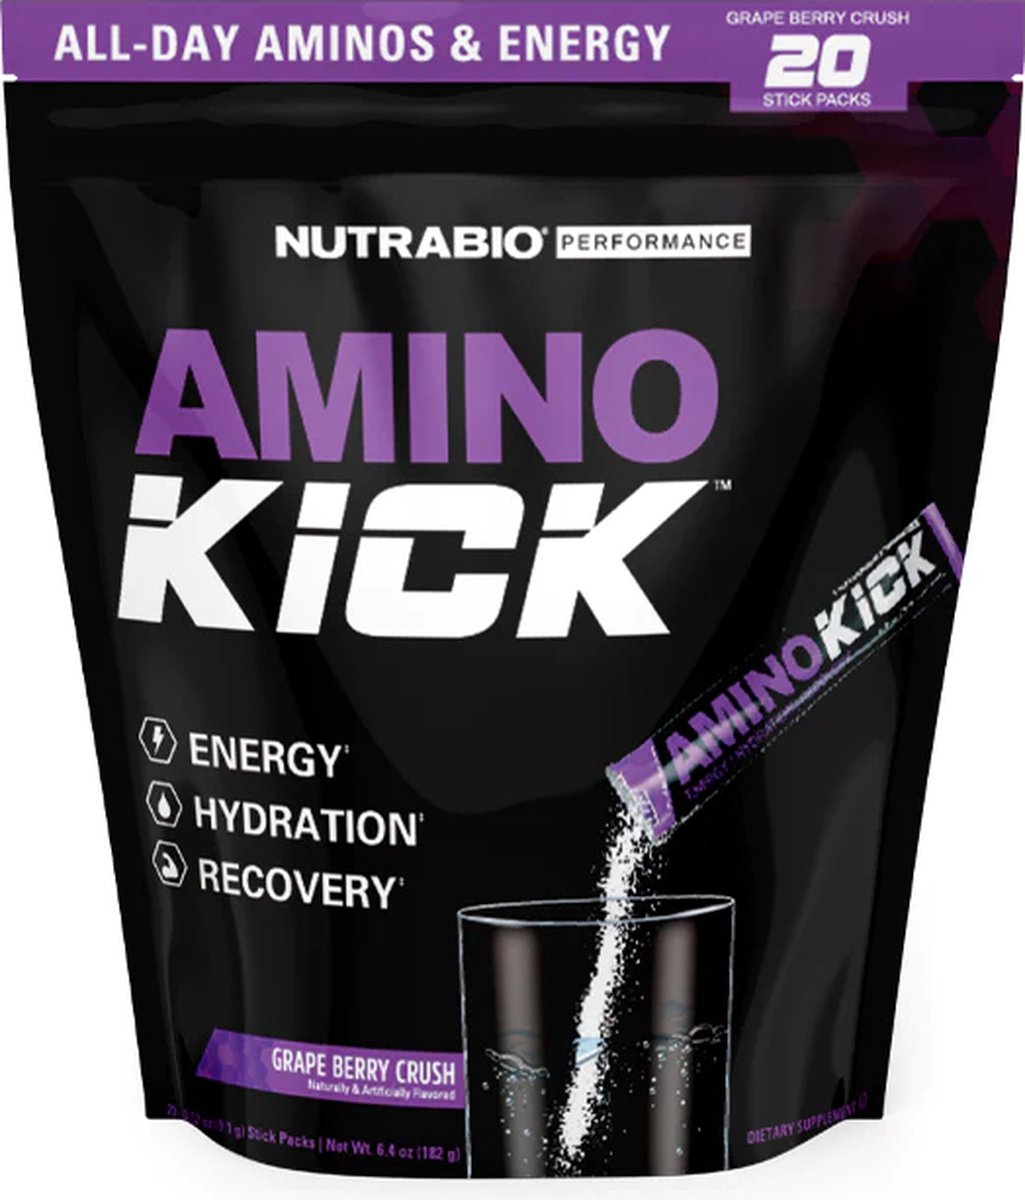 Nutrabio Amino Kick Stick Pack - 20 Serving Bag Variety Pack